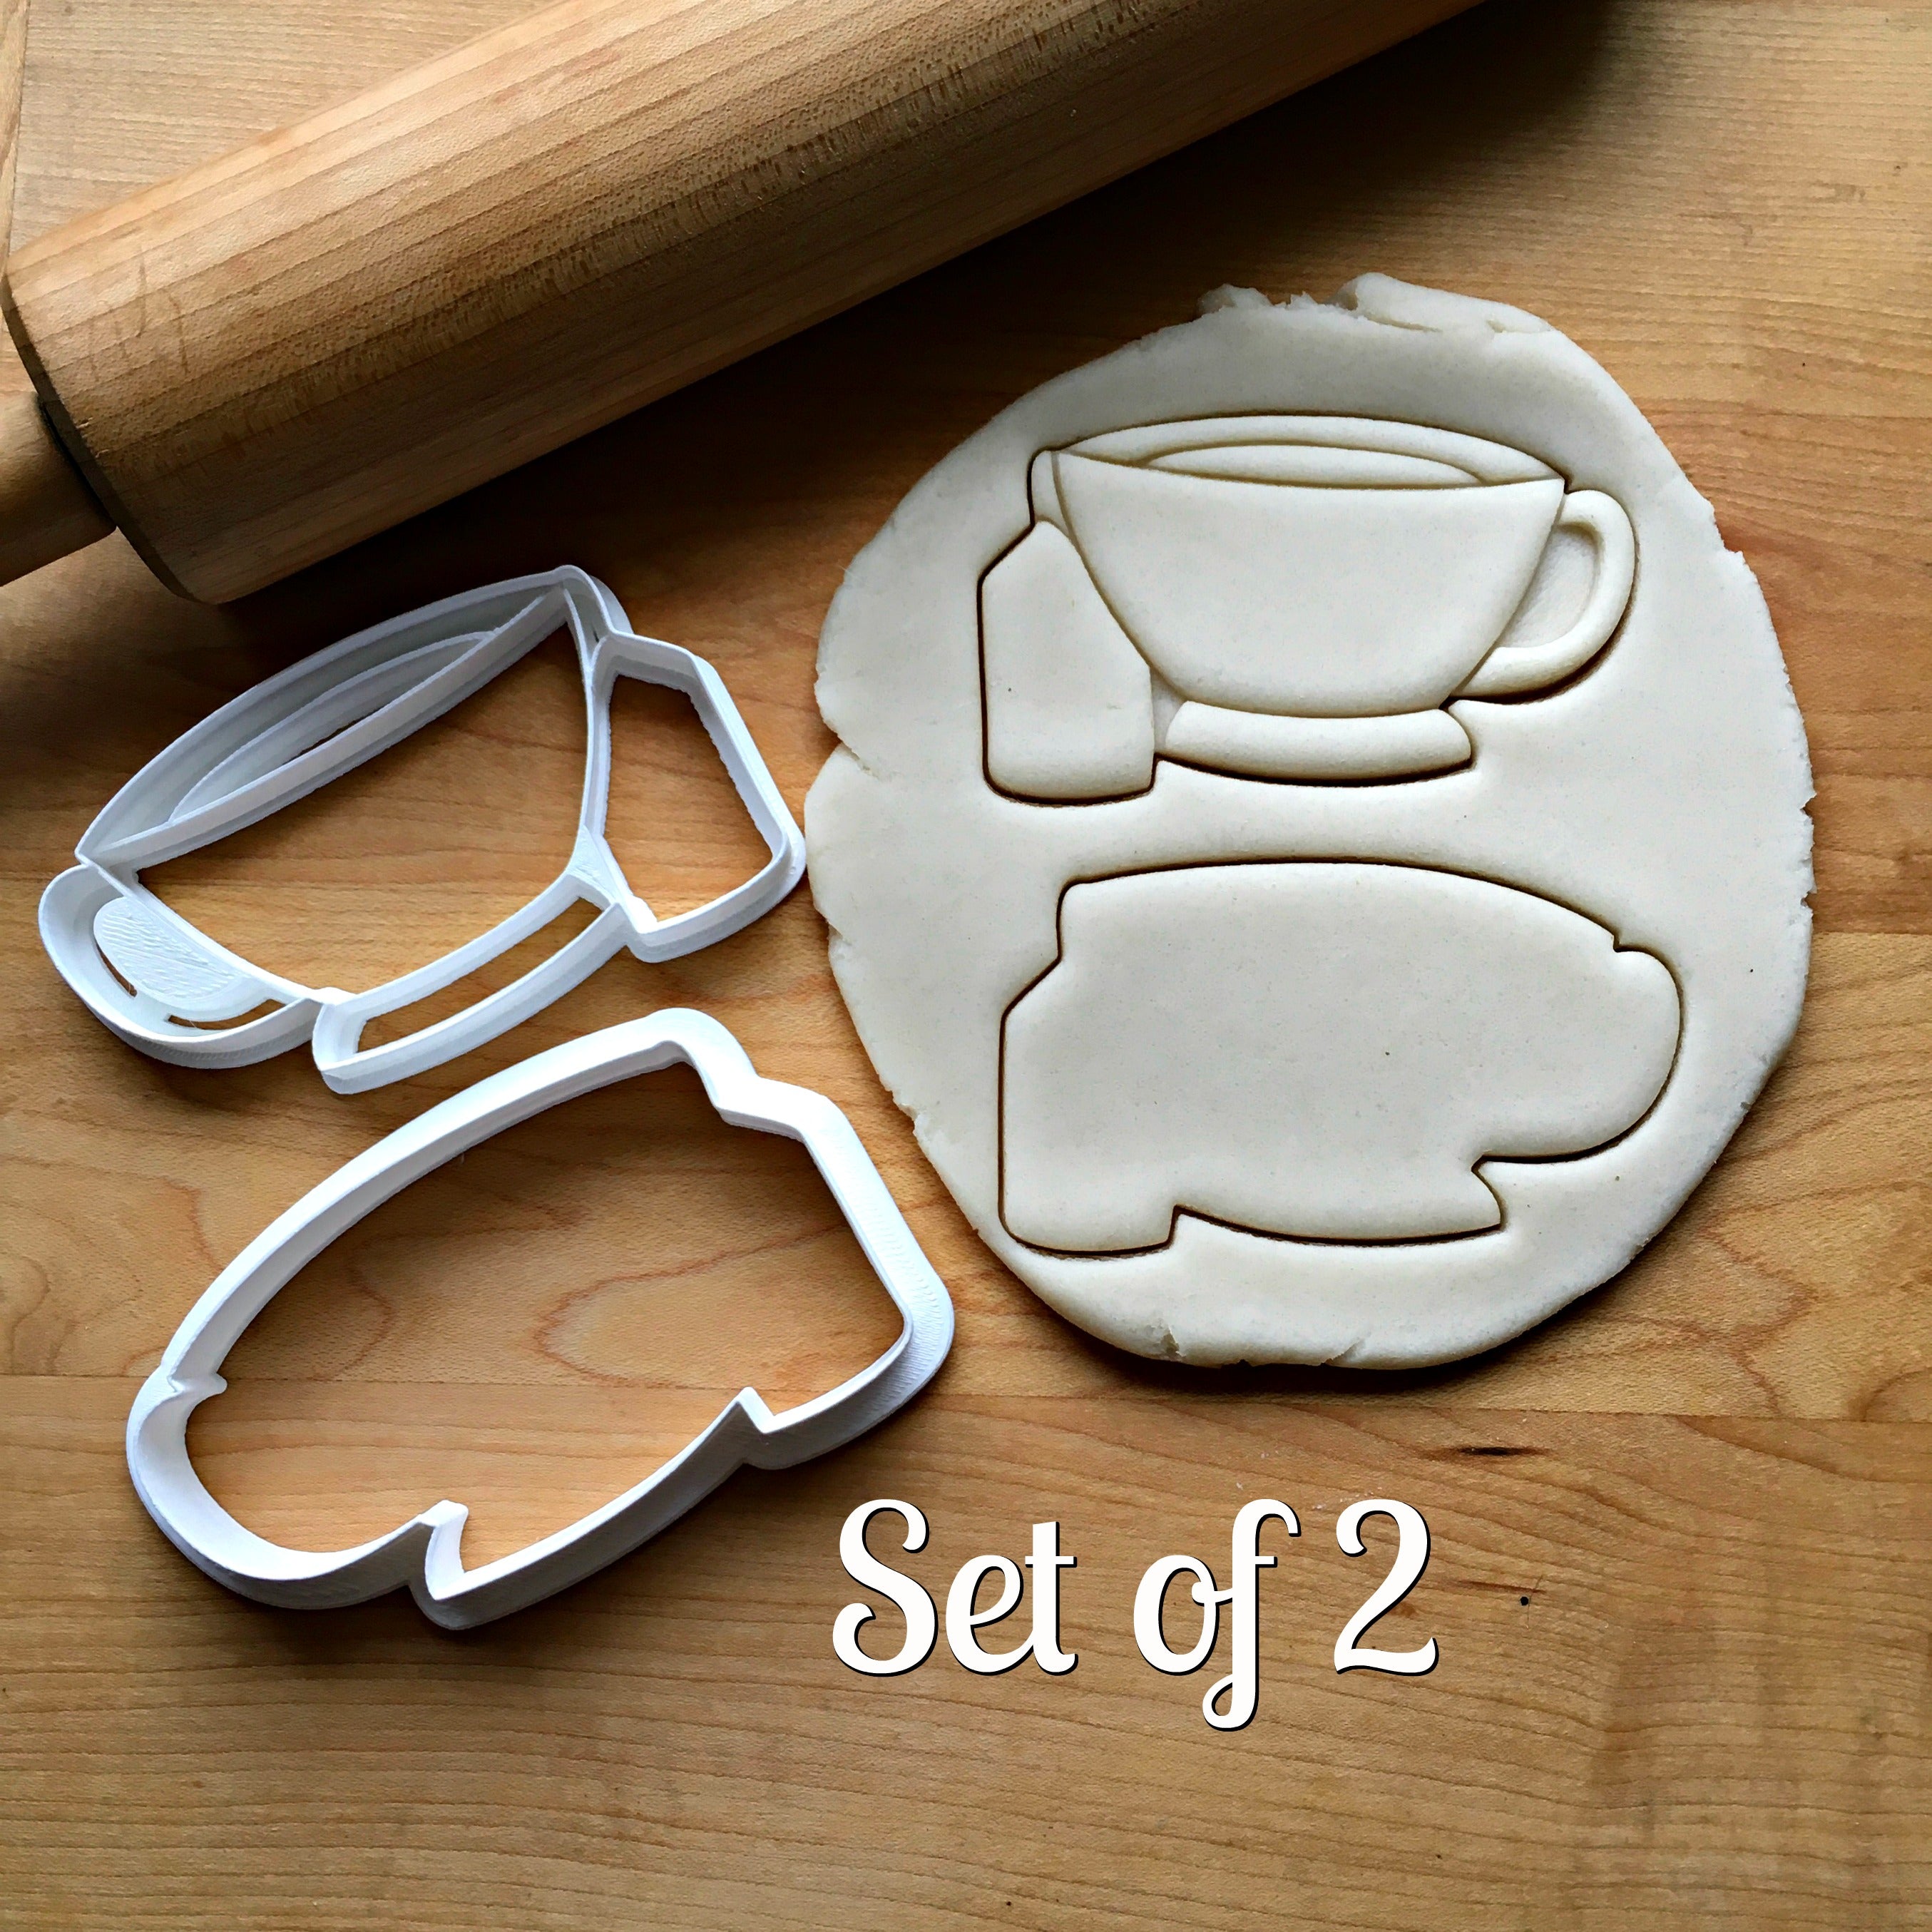 Set of 2 Teacup Cookie Cutters/Dishwasher Safe